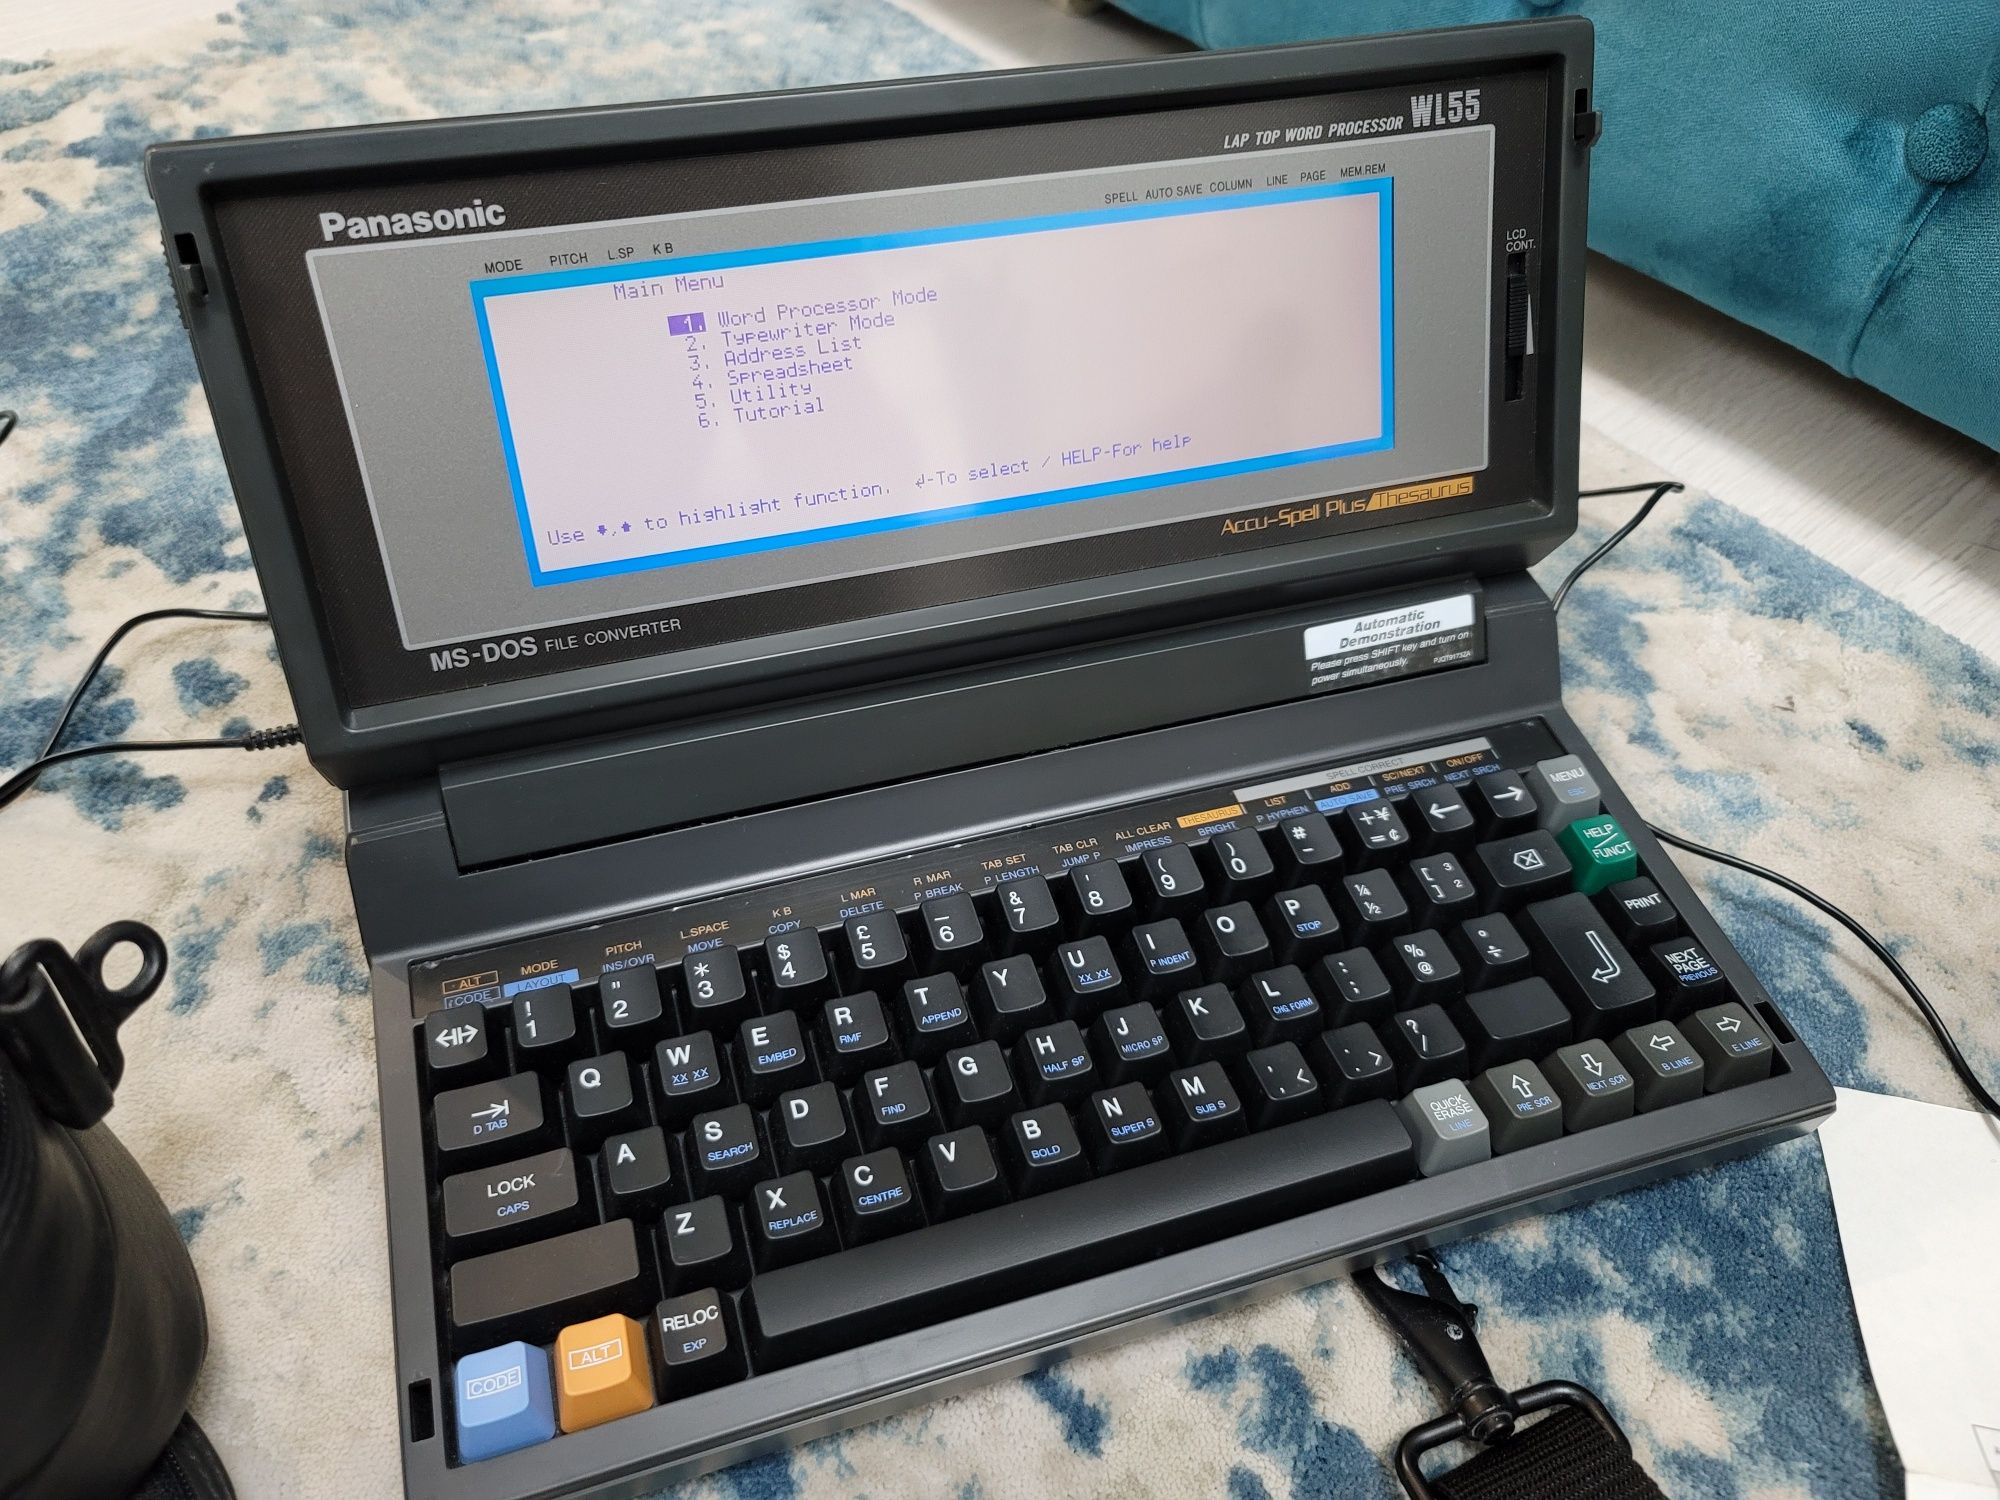 masina de scris PANASONIC KX-WL55, ms-dos sistem, vintage